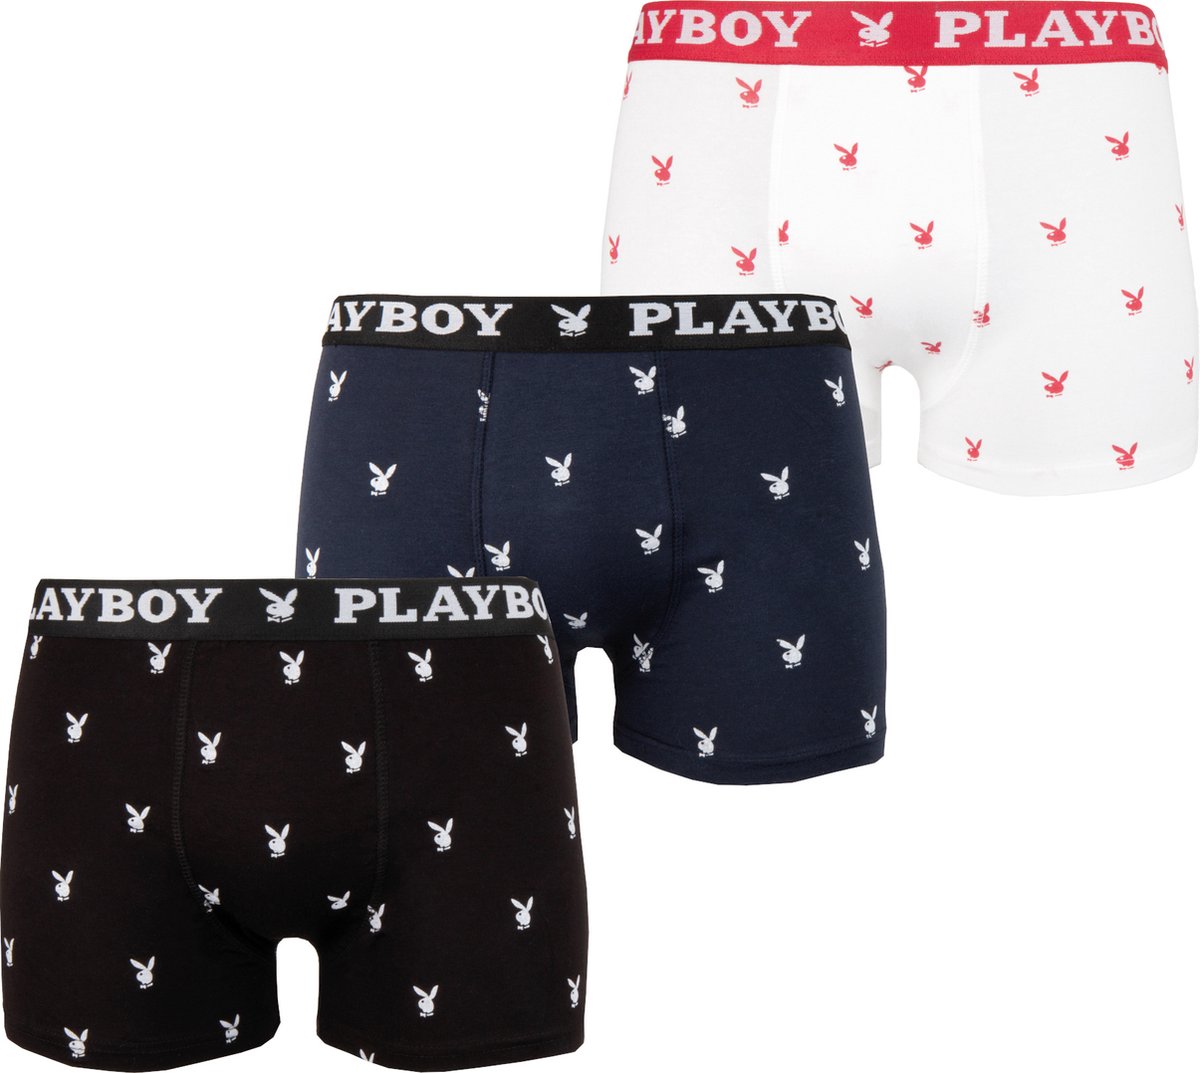 Playboy Boxershort 3 Pack Playboy Miller Maat Xl